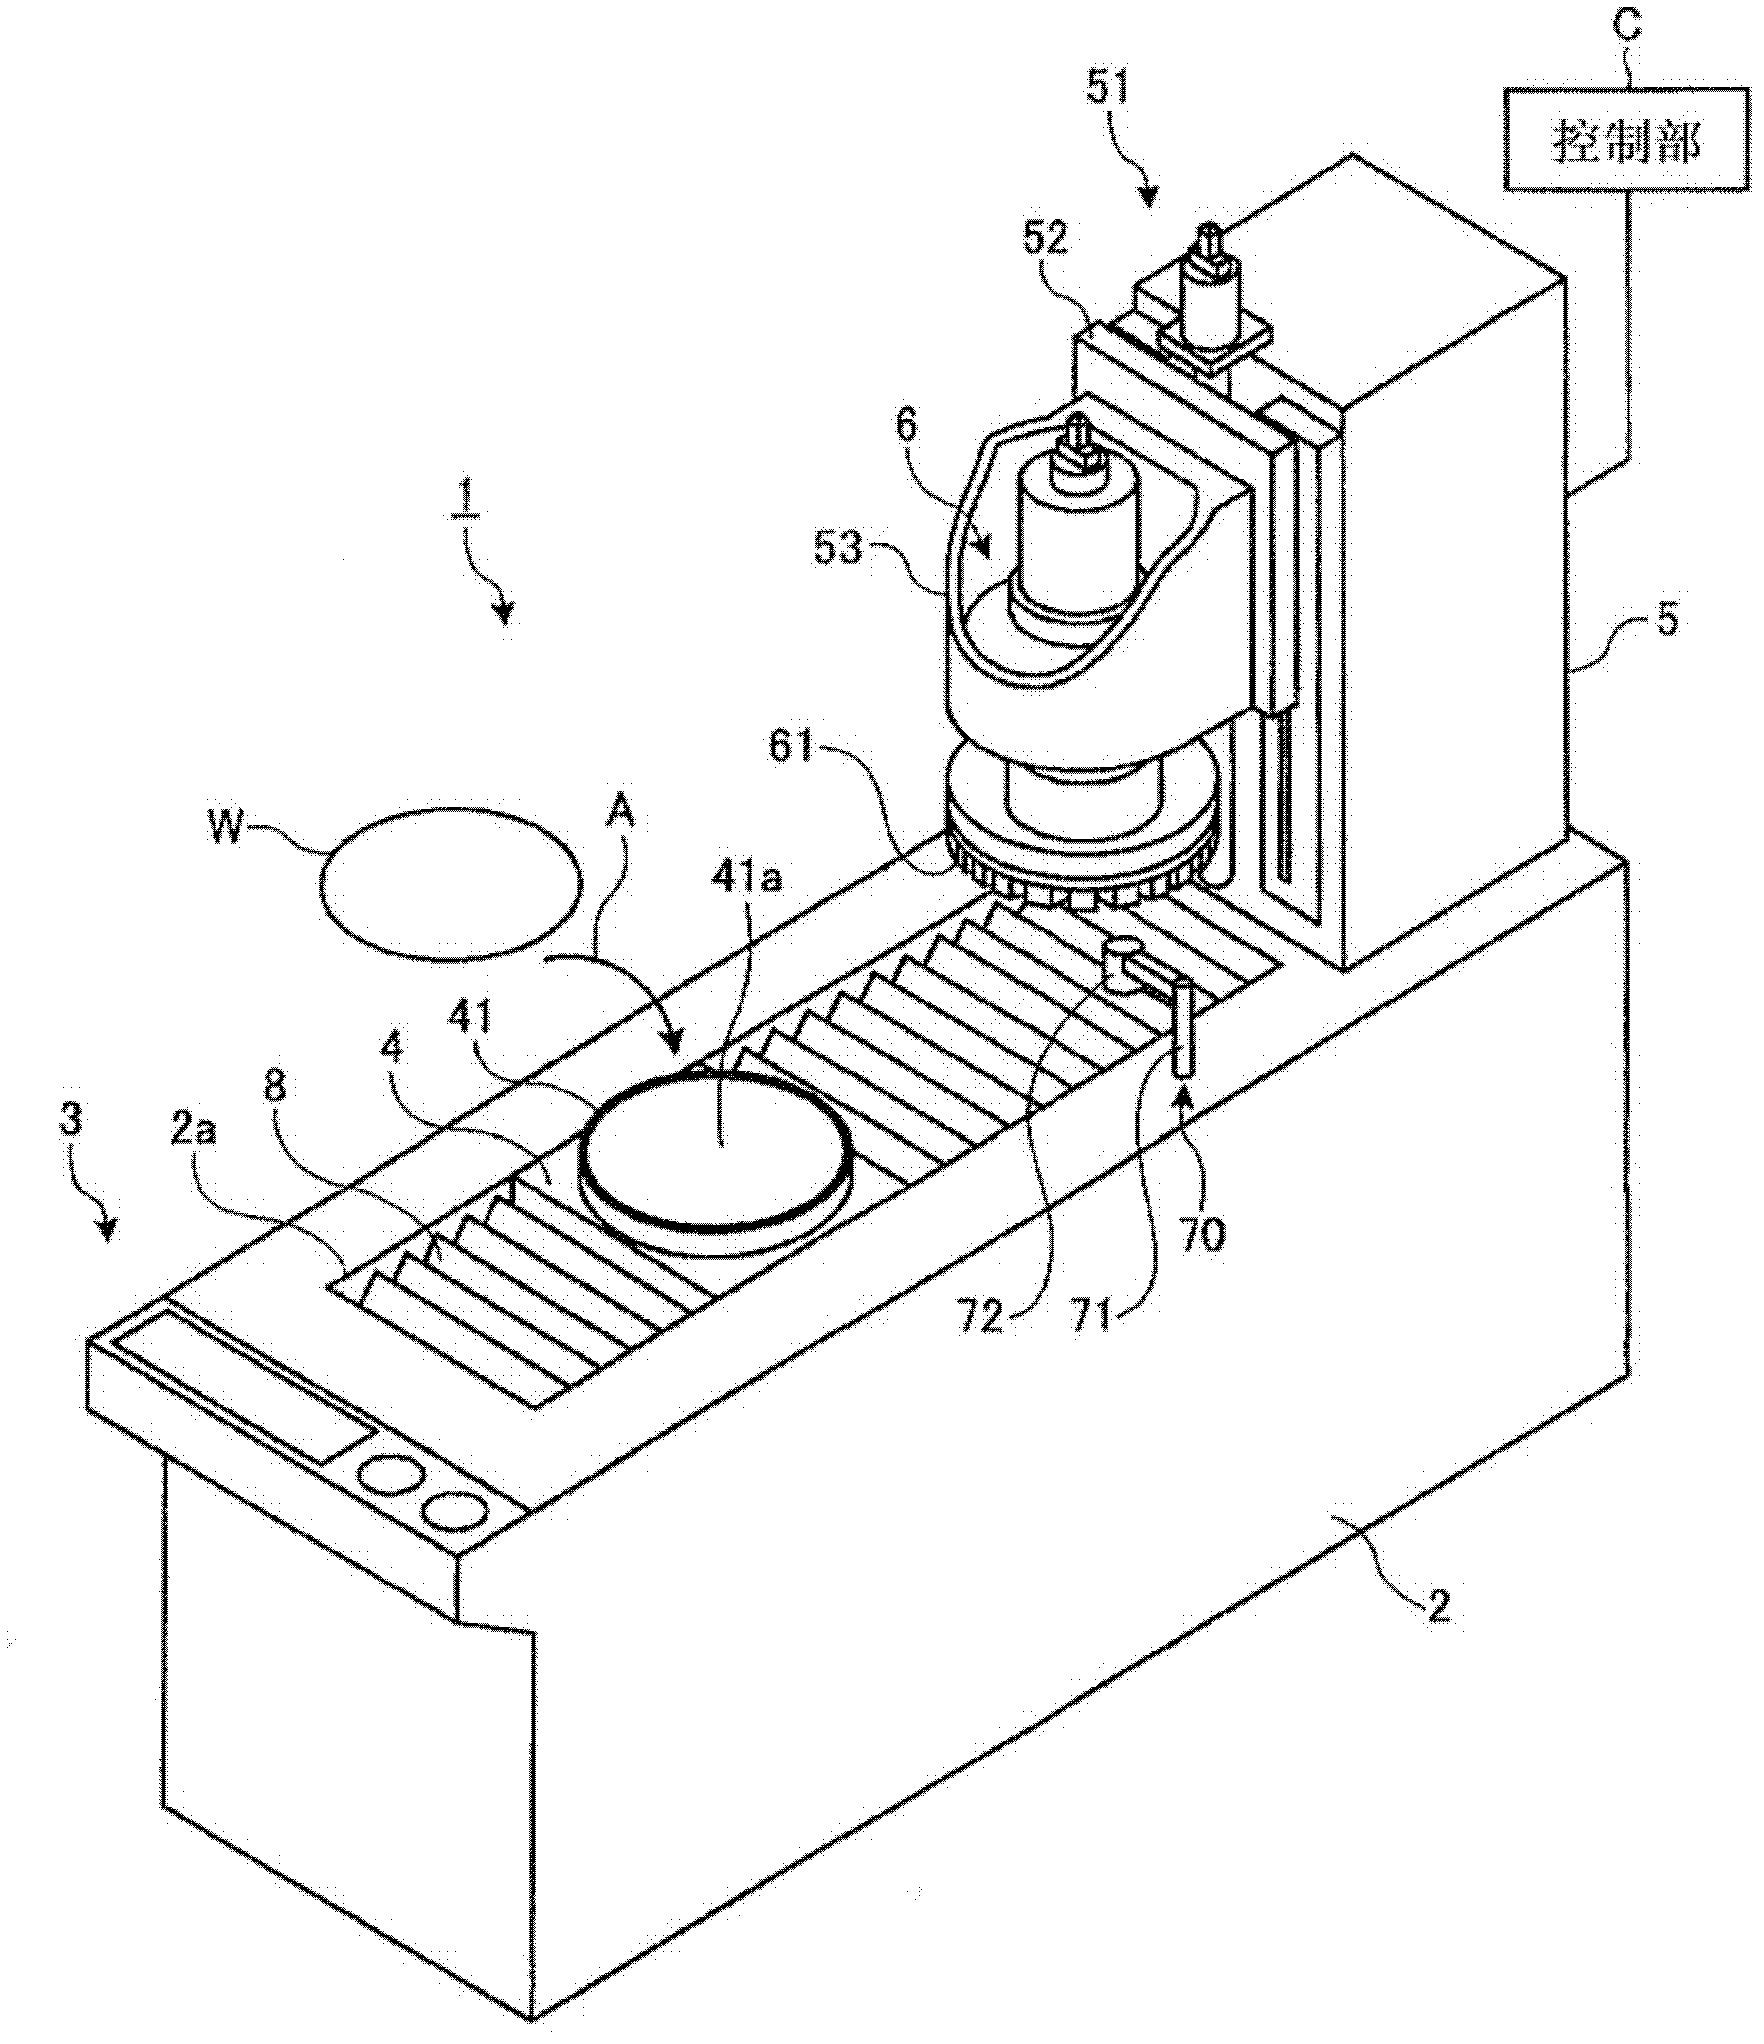 Grinding apparatus